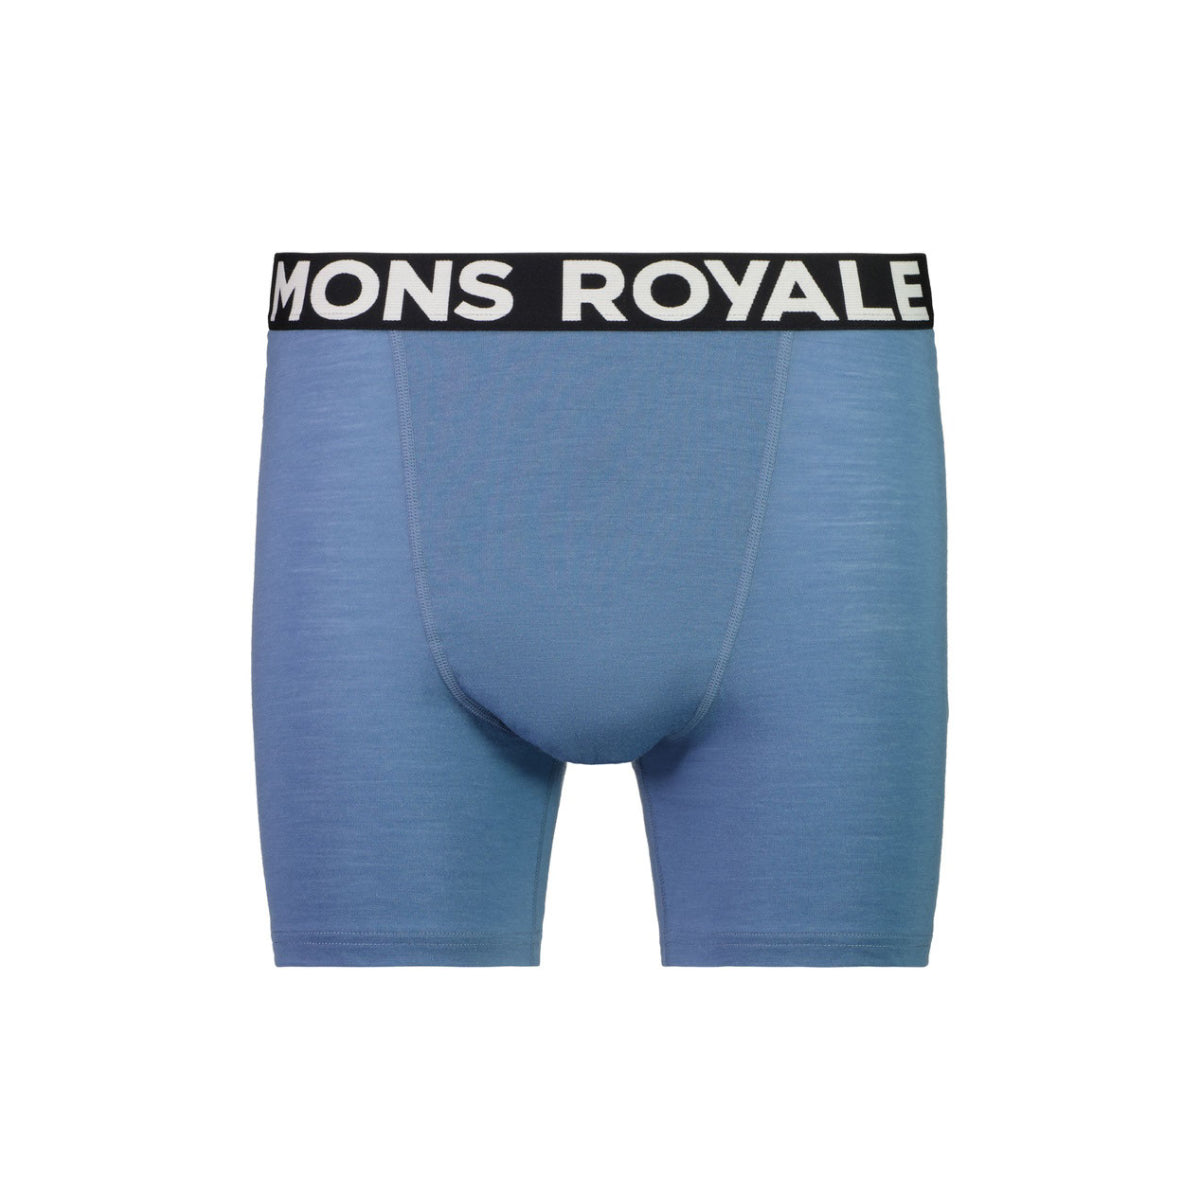 Mons Royale - Men's Hold 'em Boxer - Blue Slate